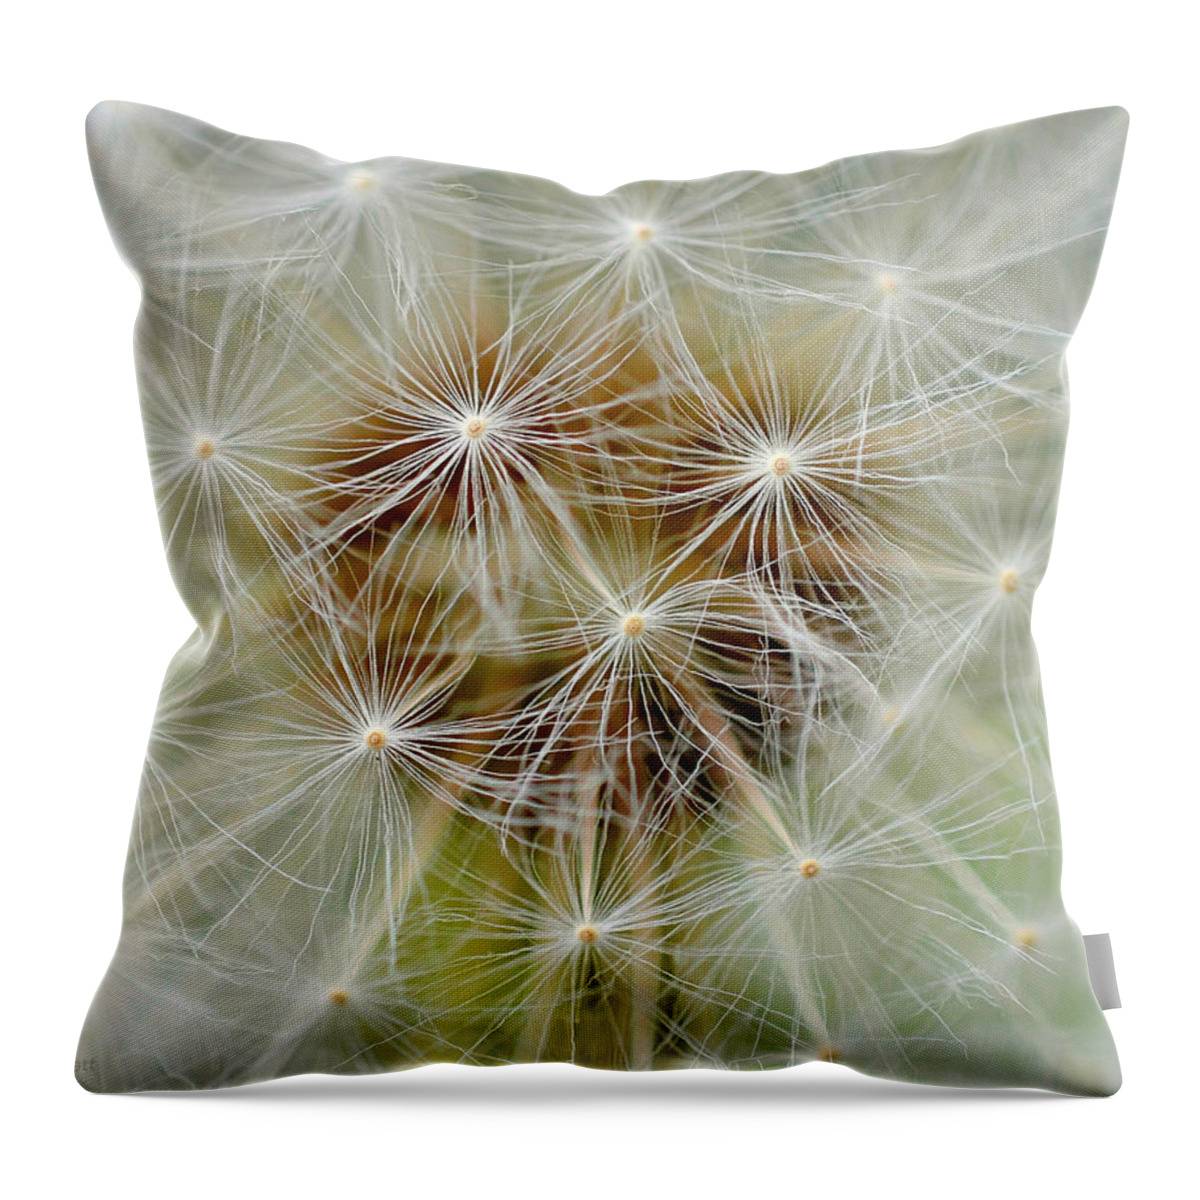 Dandelion Throw Pillow featuring the photograph Dandelion Matrix by Andrea Platt